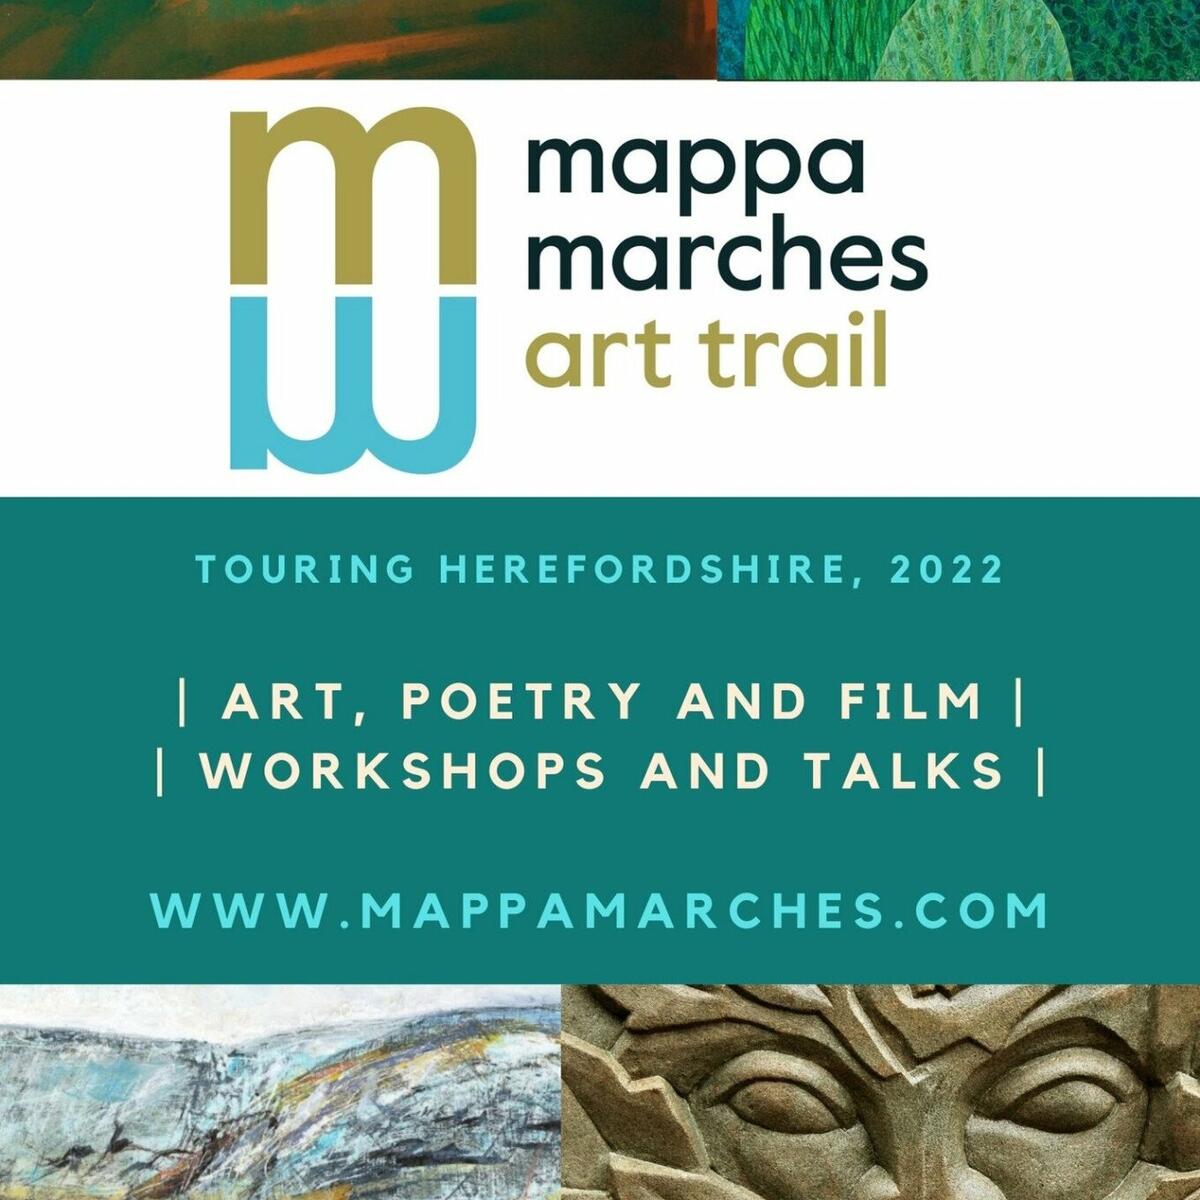 Mappa Marches Art Trail